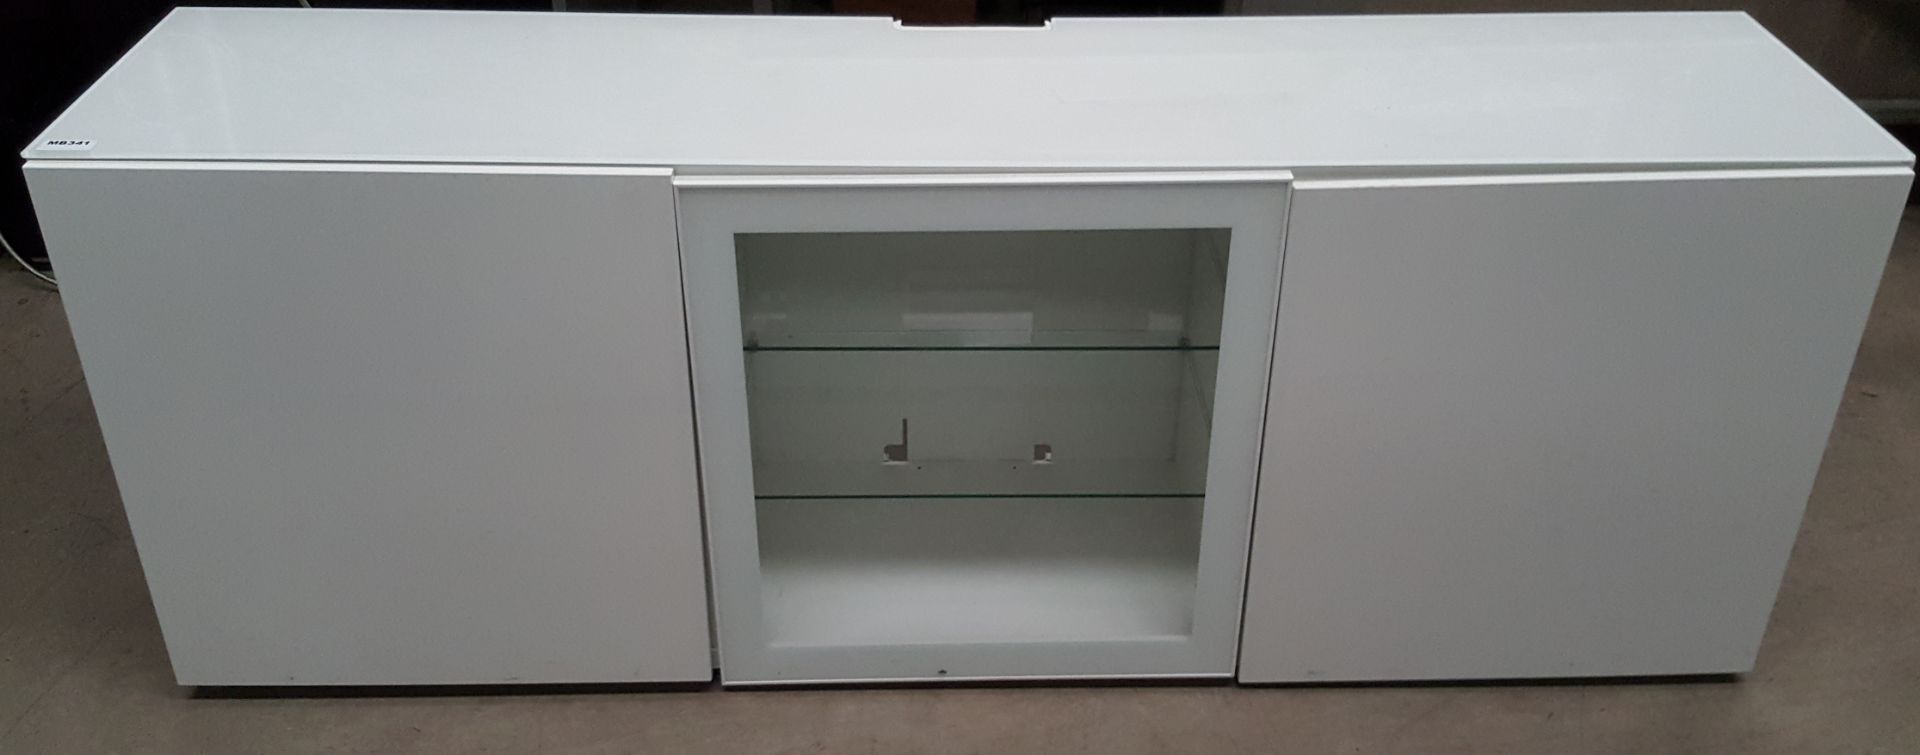 1 x Ikea Glassvik Tv Shelf Unit With Glass Door - MB341 - CL011 - Location: Altrincham WA14 - Image 8 of 8